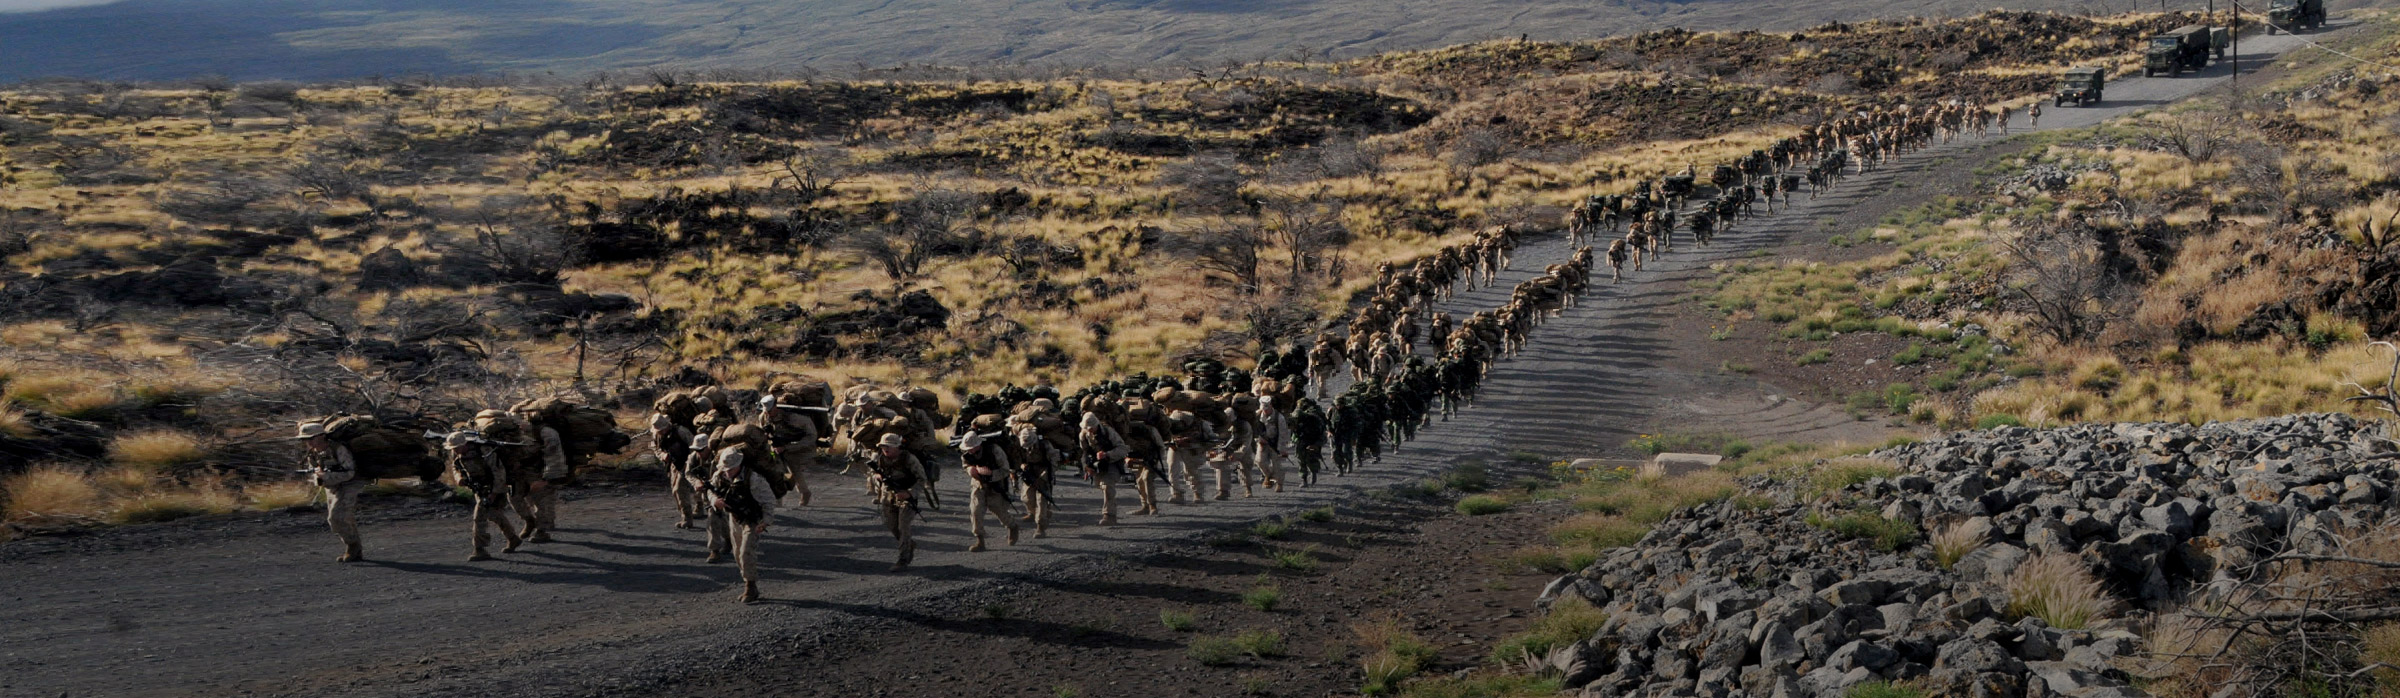 AM 10:00 - 여명이 밝아오는 새벽, 초계비행중인 자랑스러운 우리 공군 - 우리 군은 24시간 우리 국토와 국민을 지키기 위해 뛰고 있습니다.